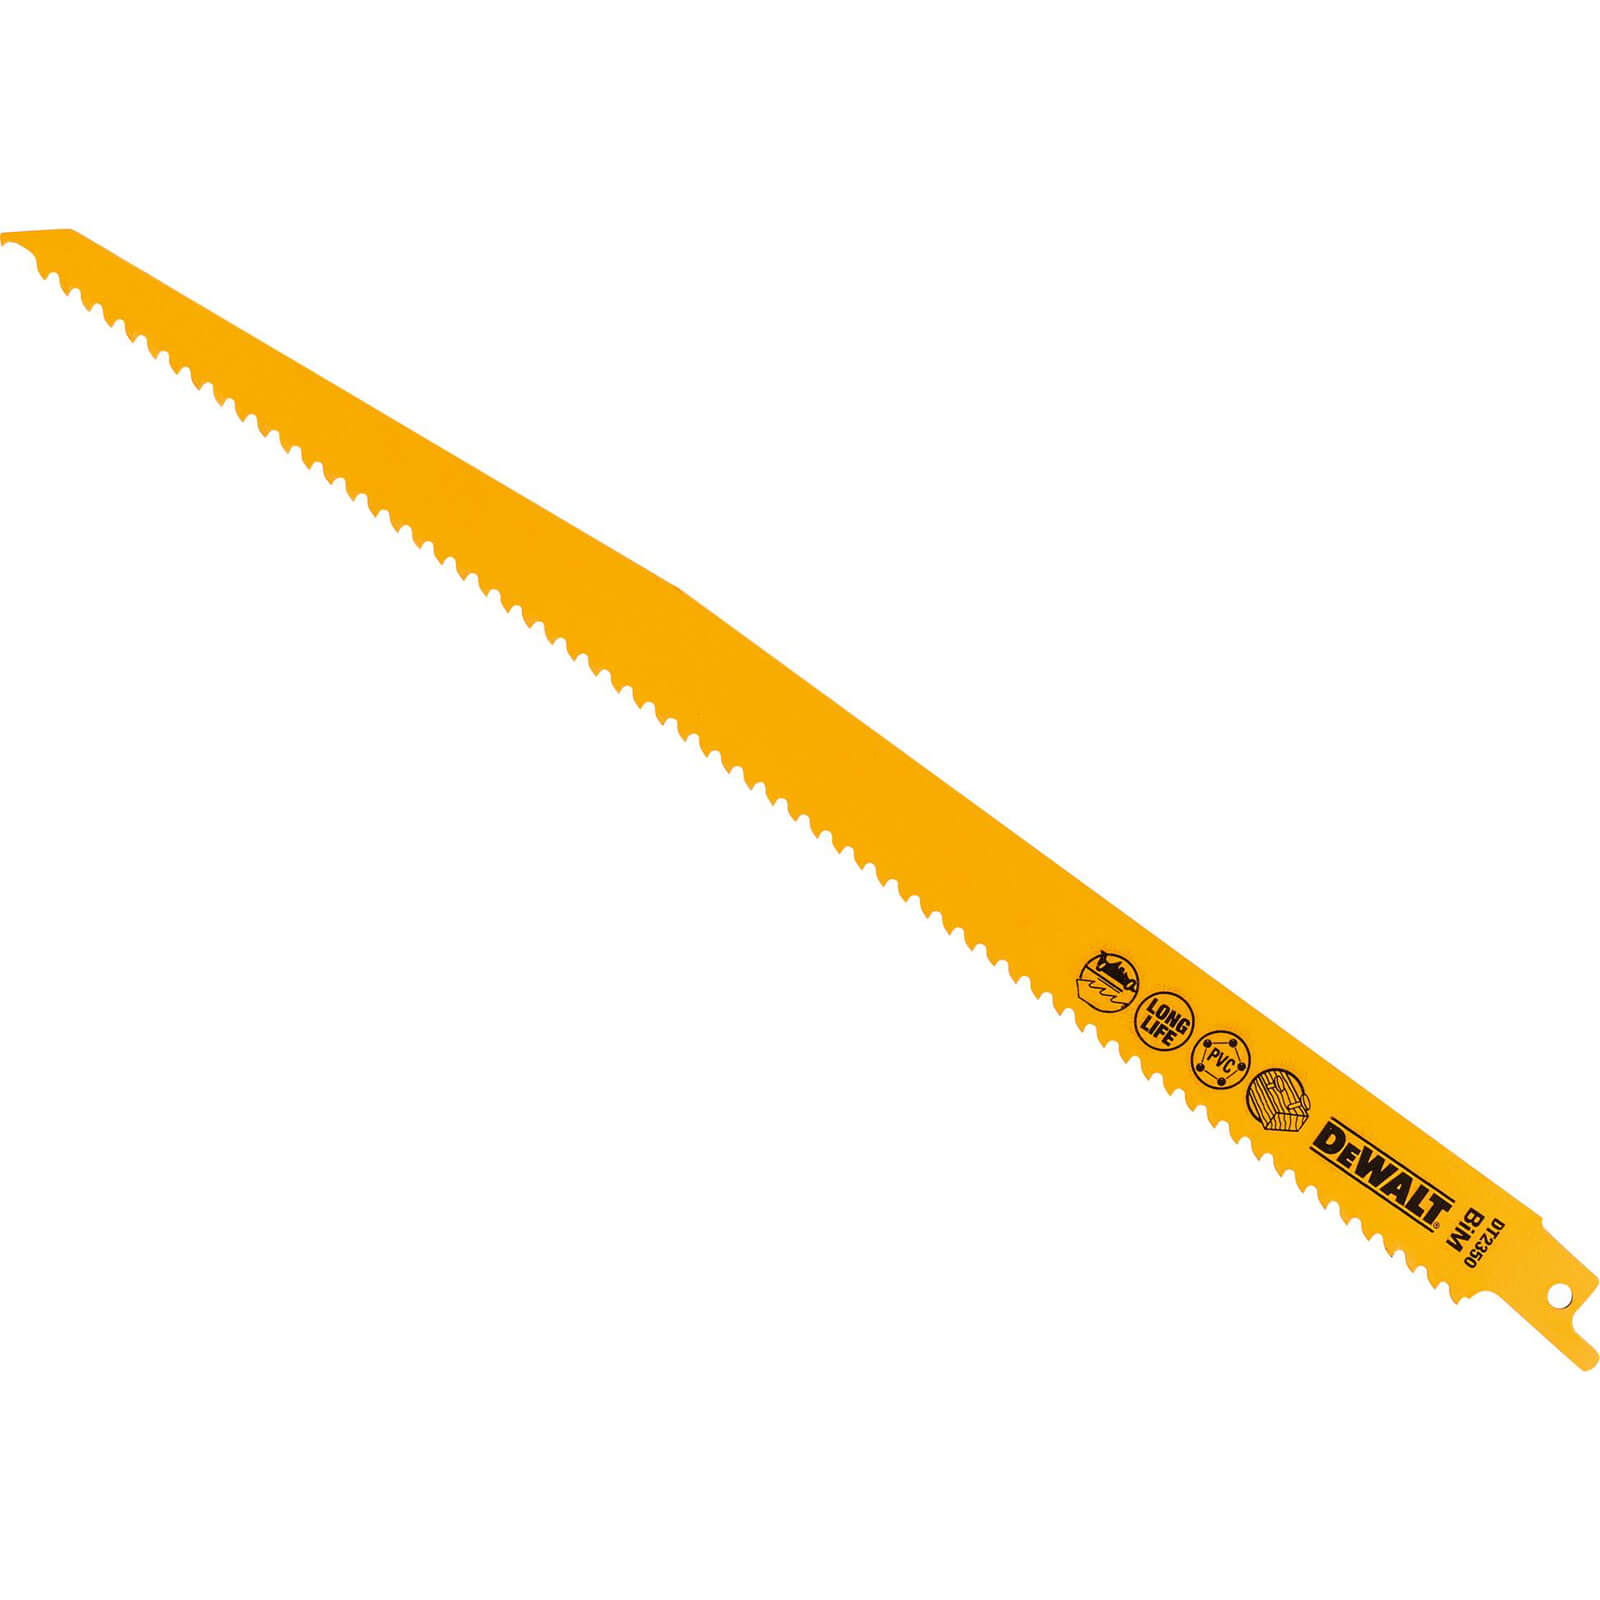 DeWalt DT2350 Bi Metal Reciprocating Saw Blade for Fast Cuts in Wood with Nails Plastics 305mm